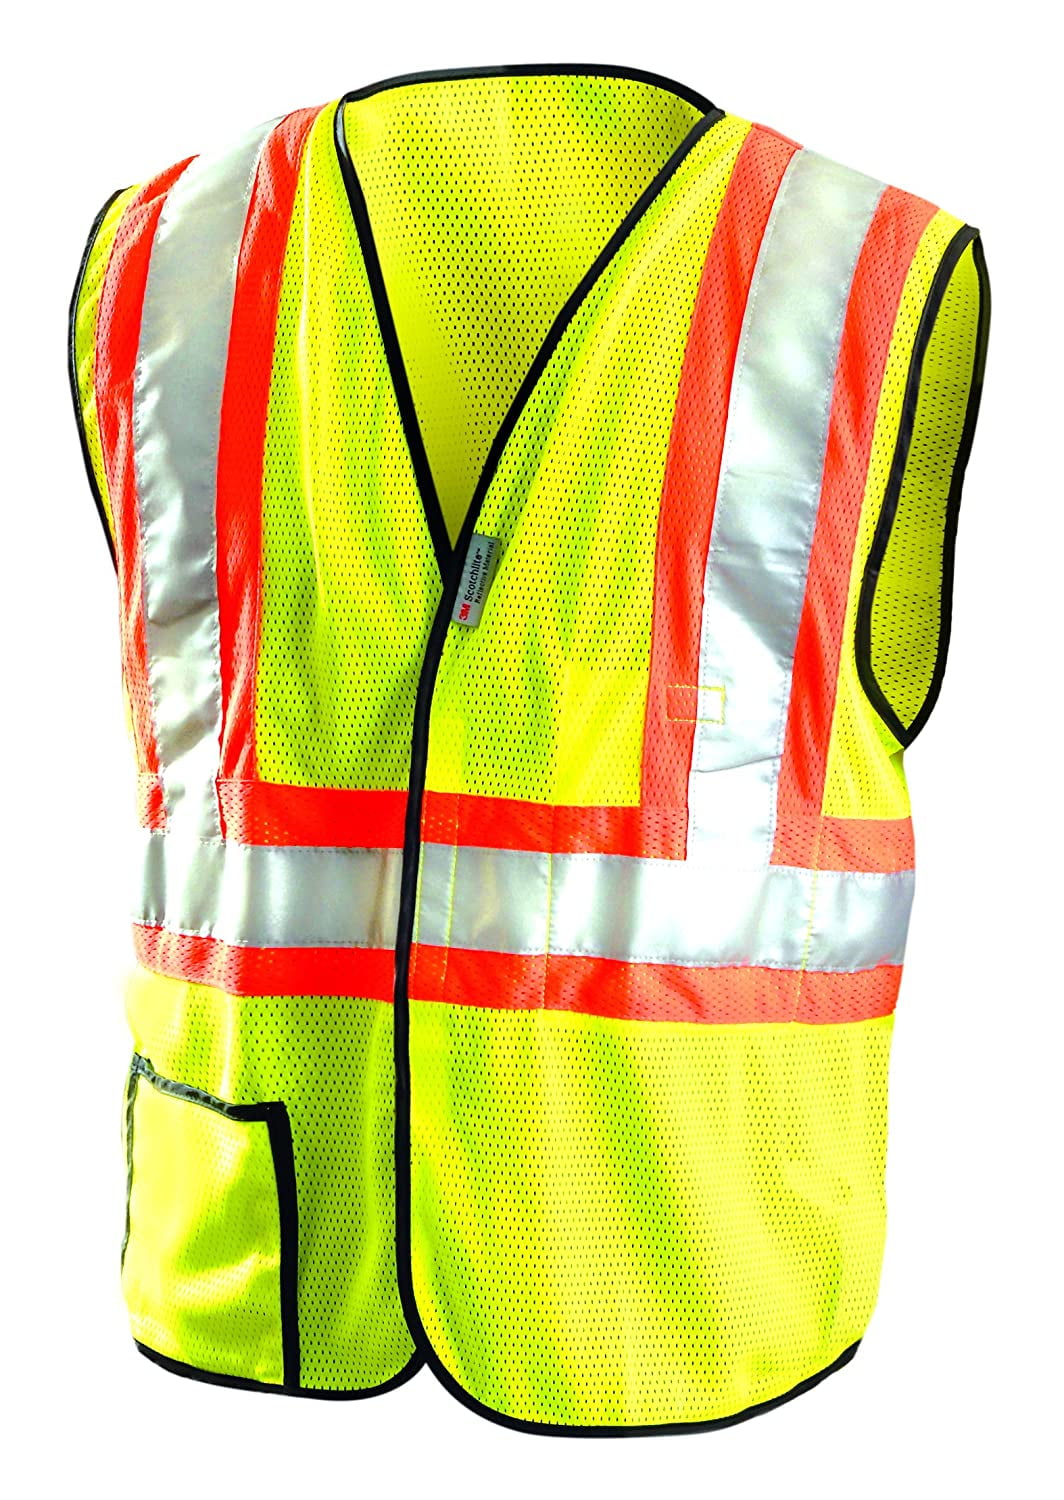 Berne Men's Hi Vis Class 2 Multi-Color Mesh Safety Vest